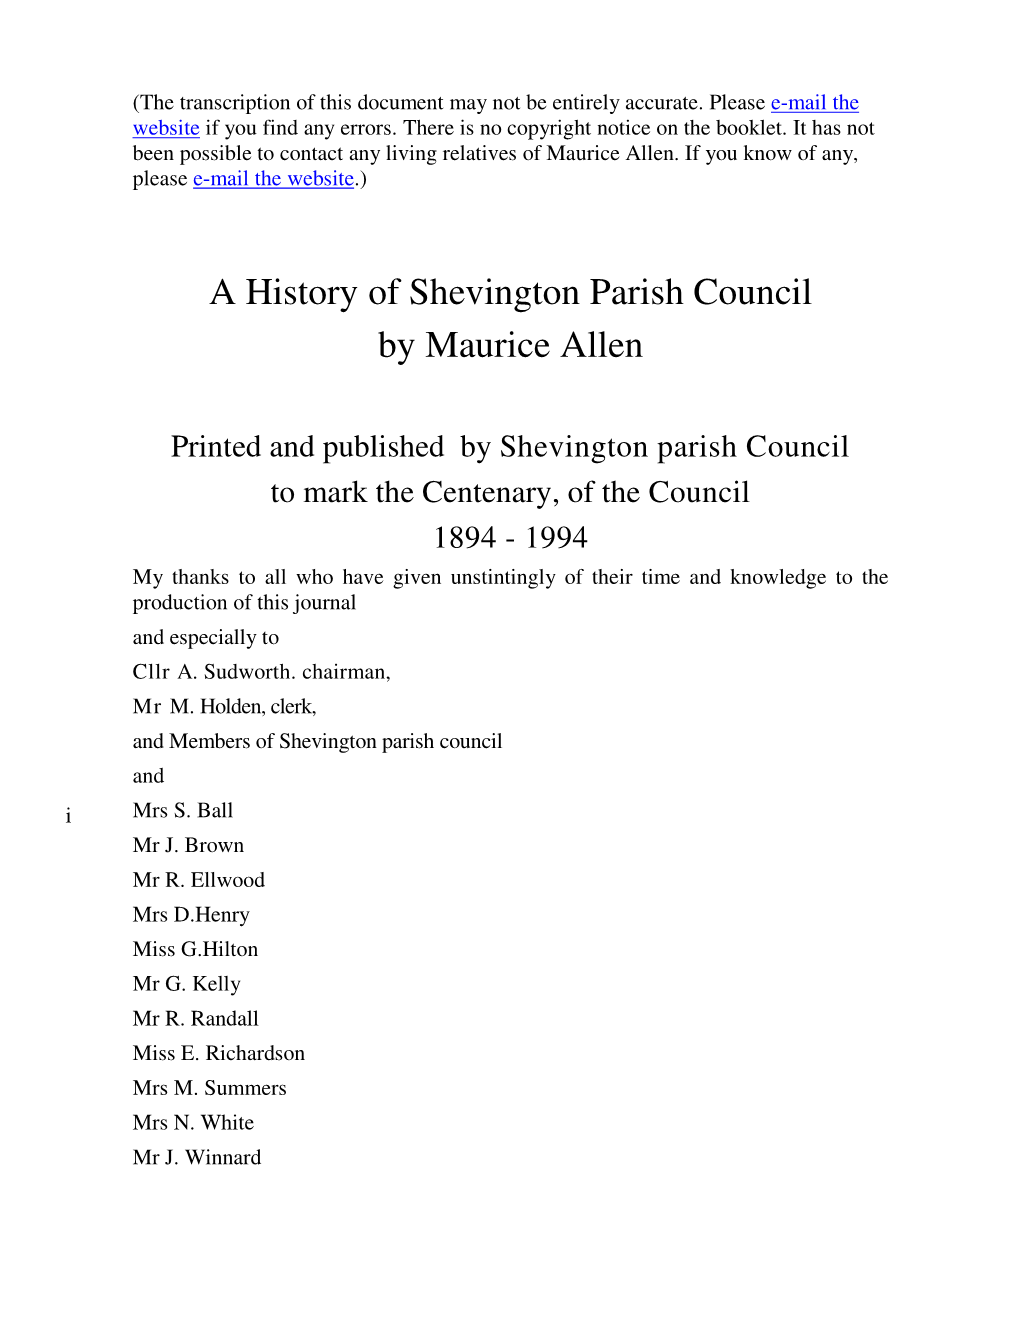 A History of Shevington Parish Council by Maurice Allen